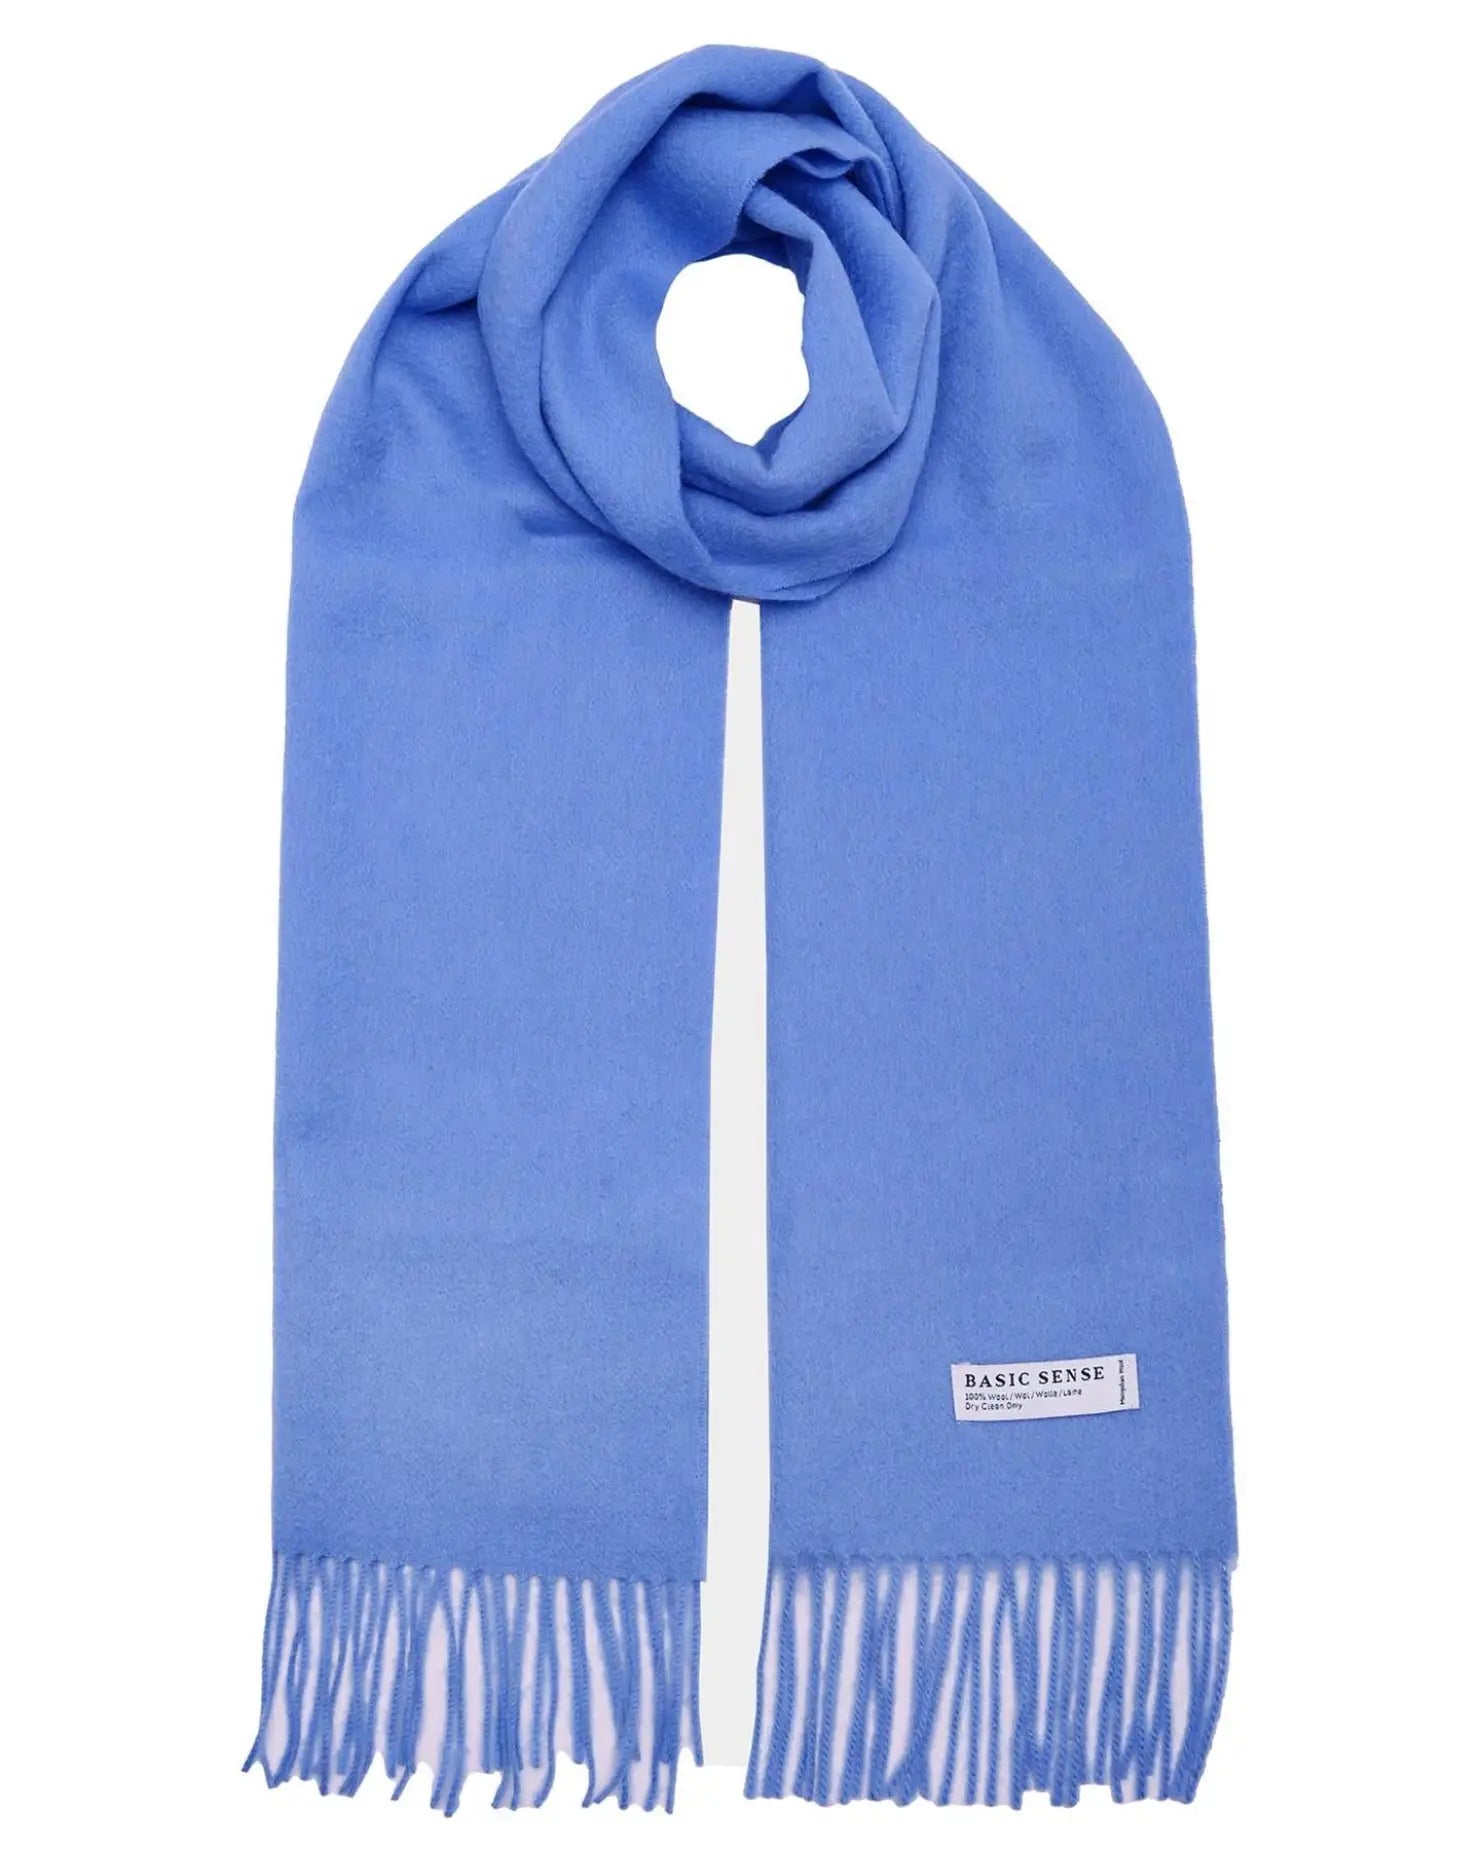 Blue Mongolian Wool Scarf with White Stripe - Warm, Soft, Unisex